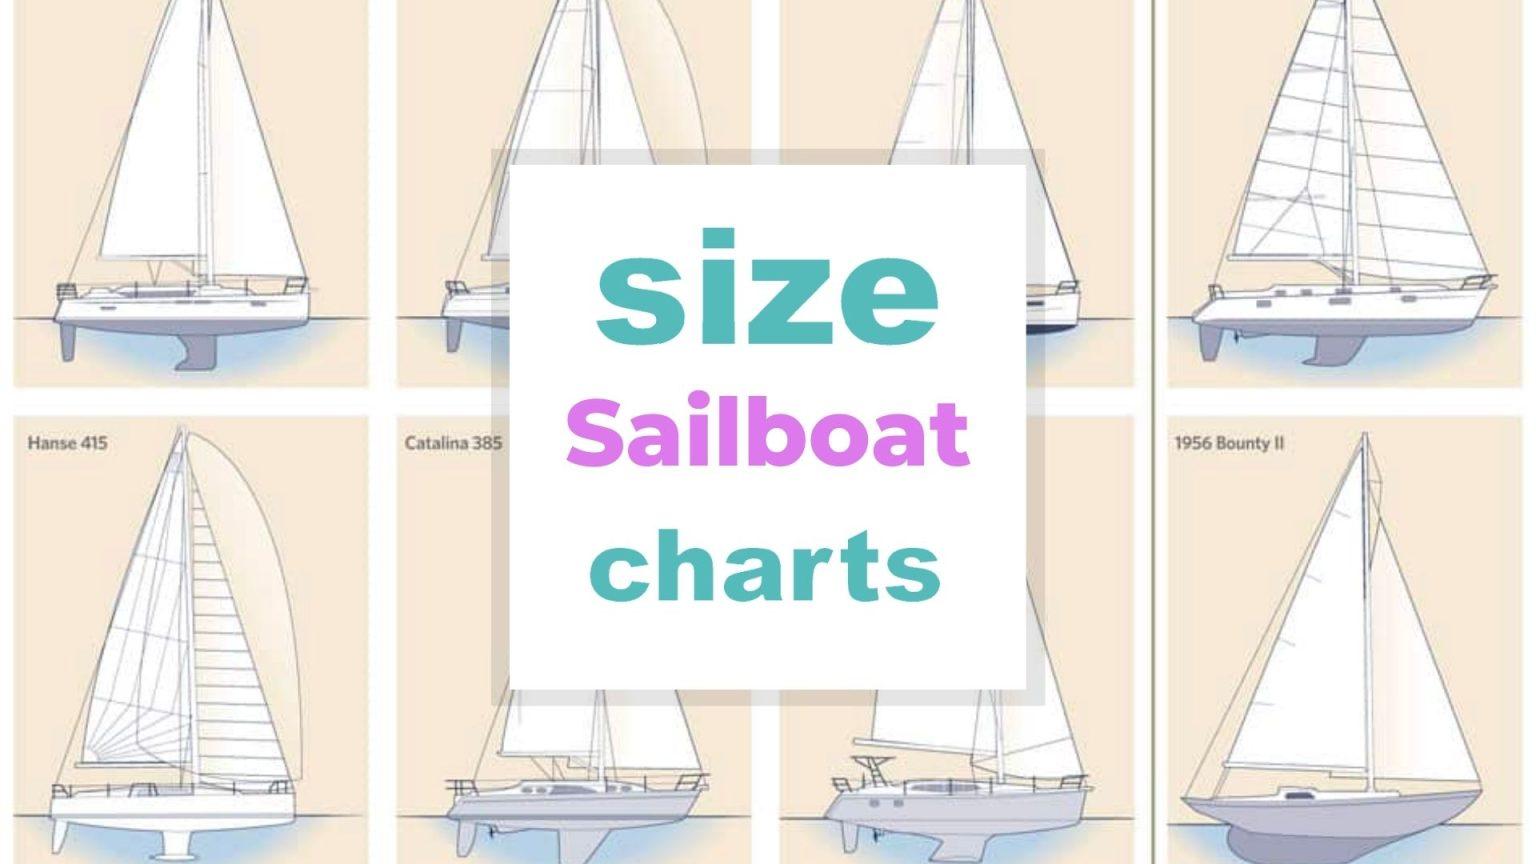 small sailboat sizes